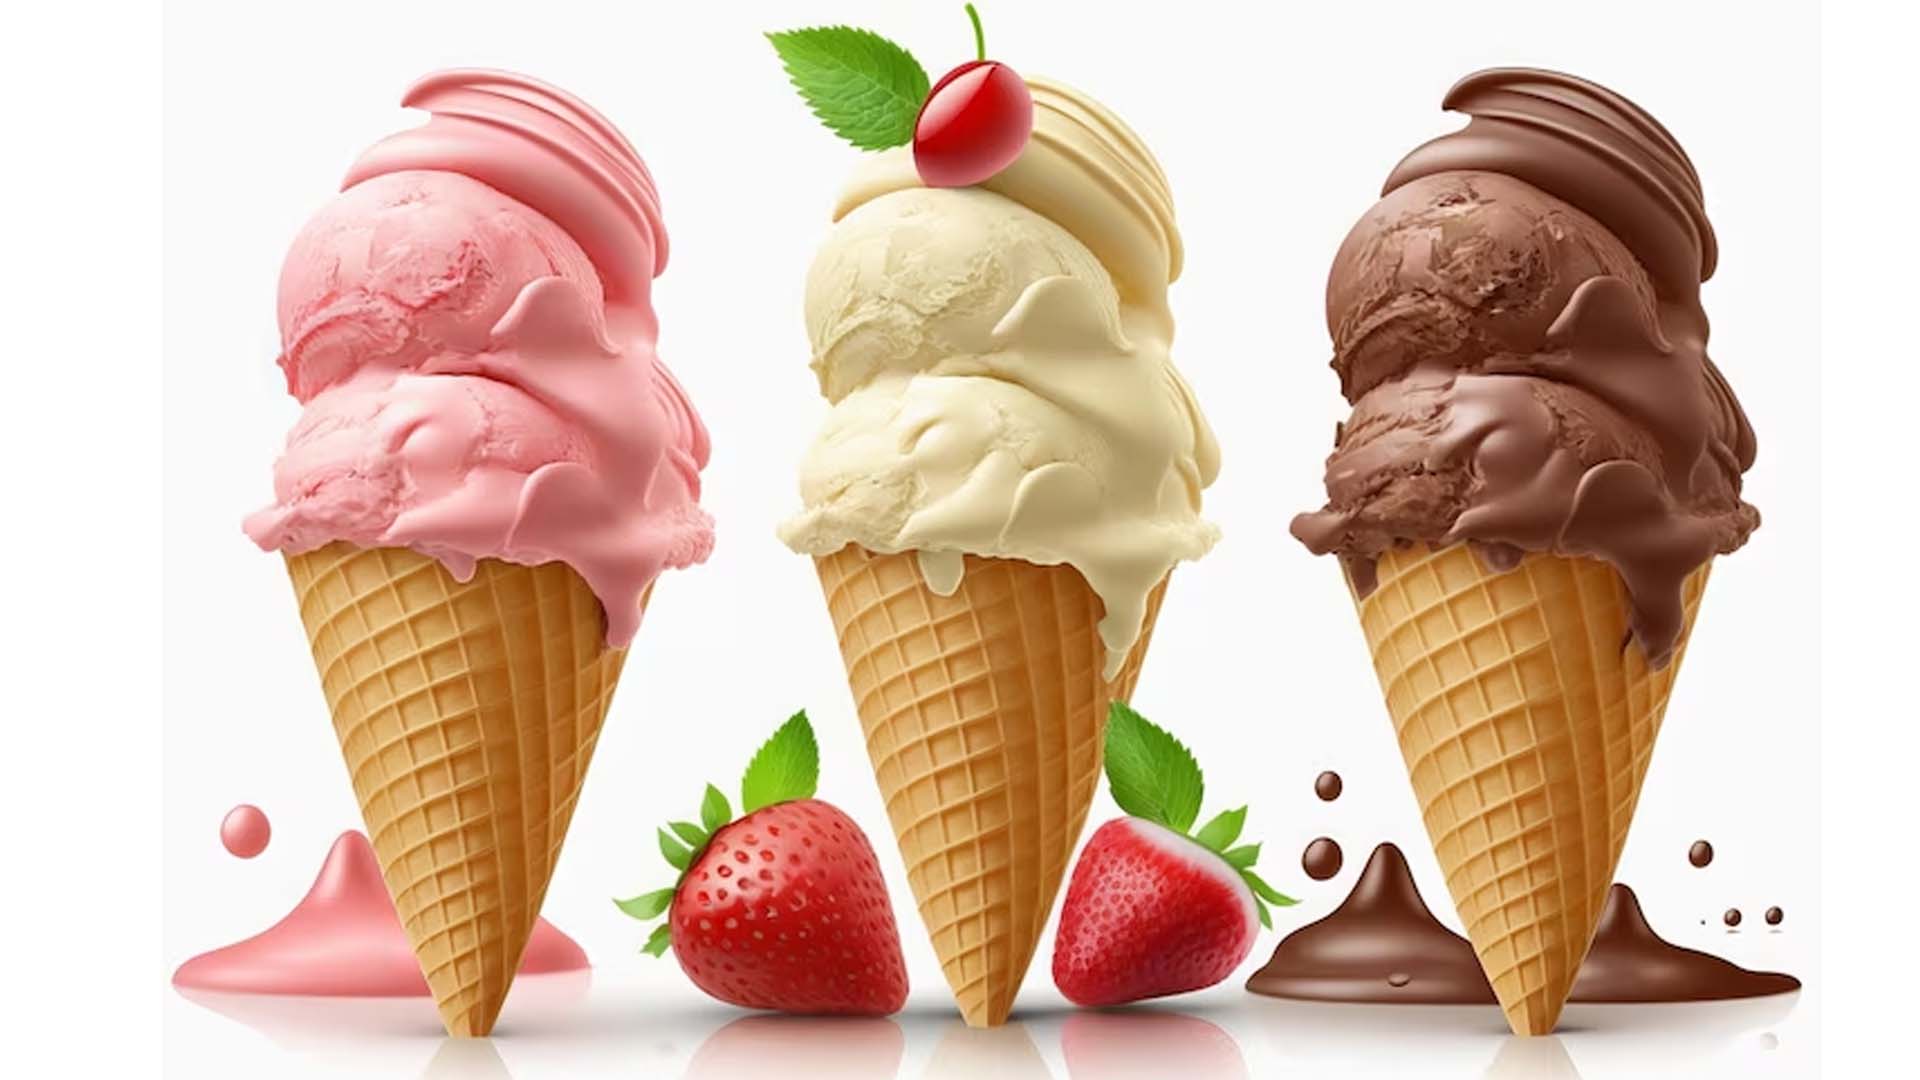 Ice cream: nutrition and drawbacks